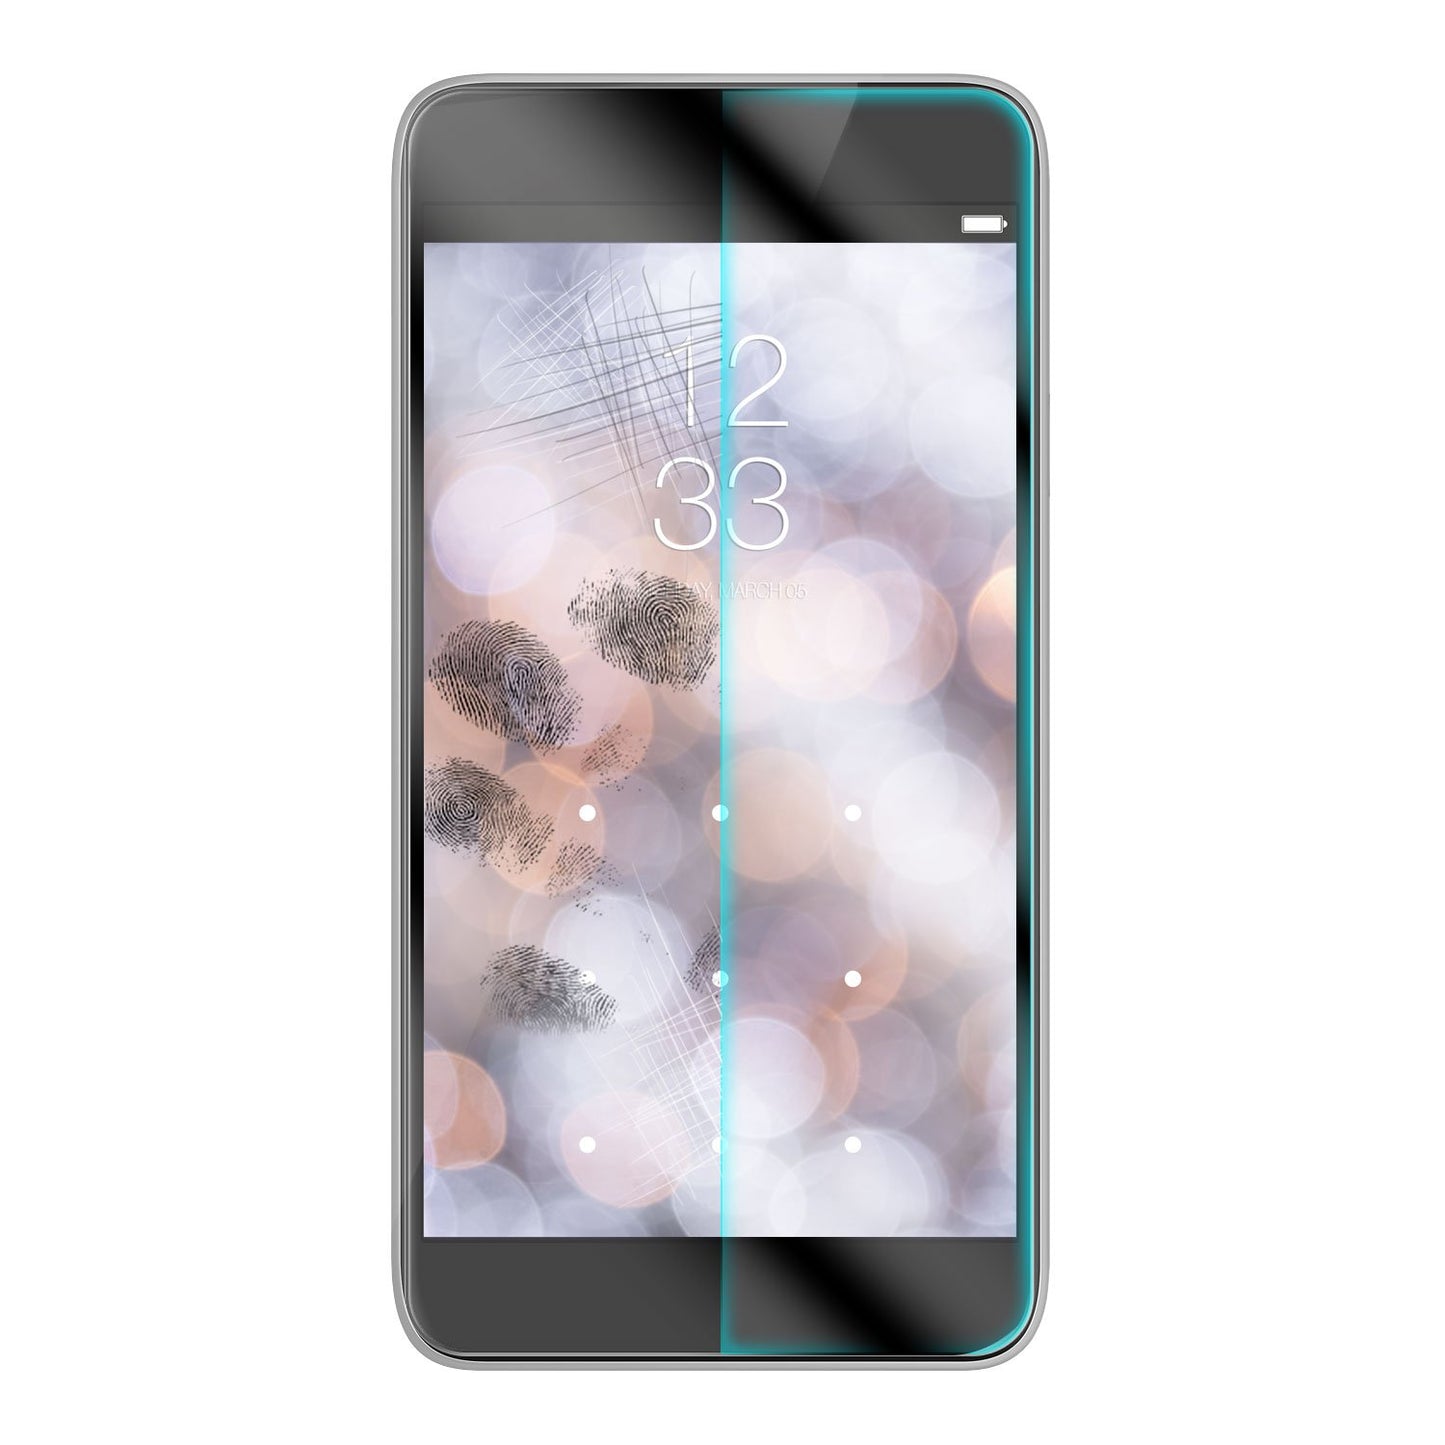 SAIPHX -Anti Glare Glass Screen Protector, Tempered Glass 9H - iPhone X